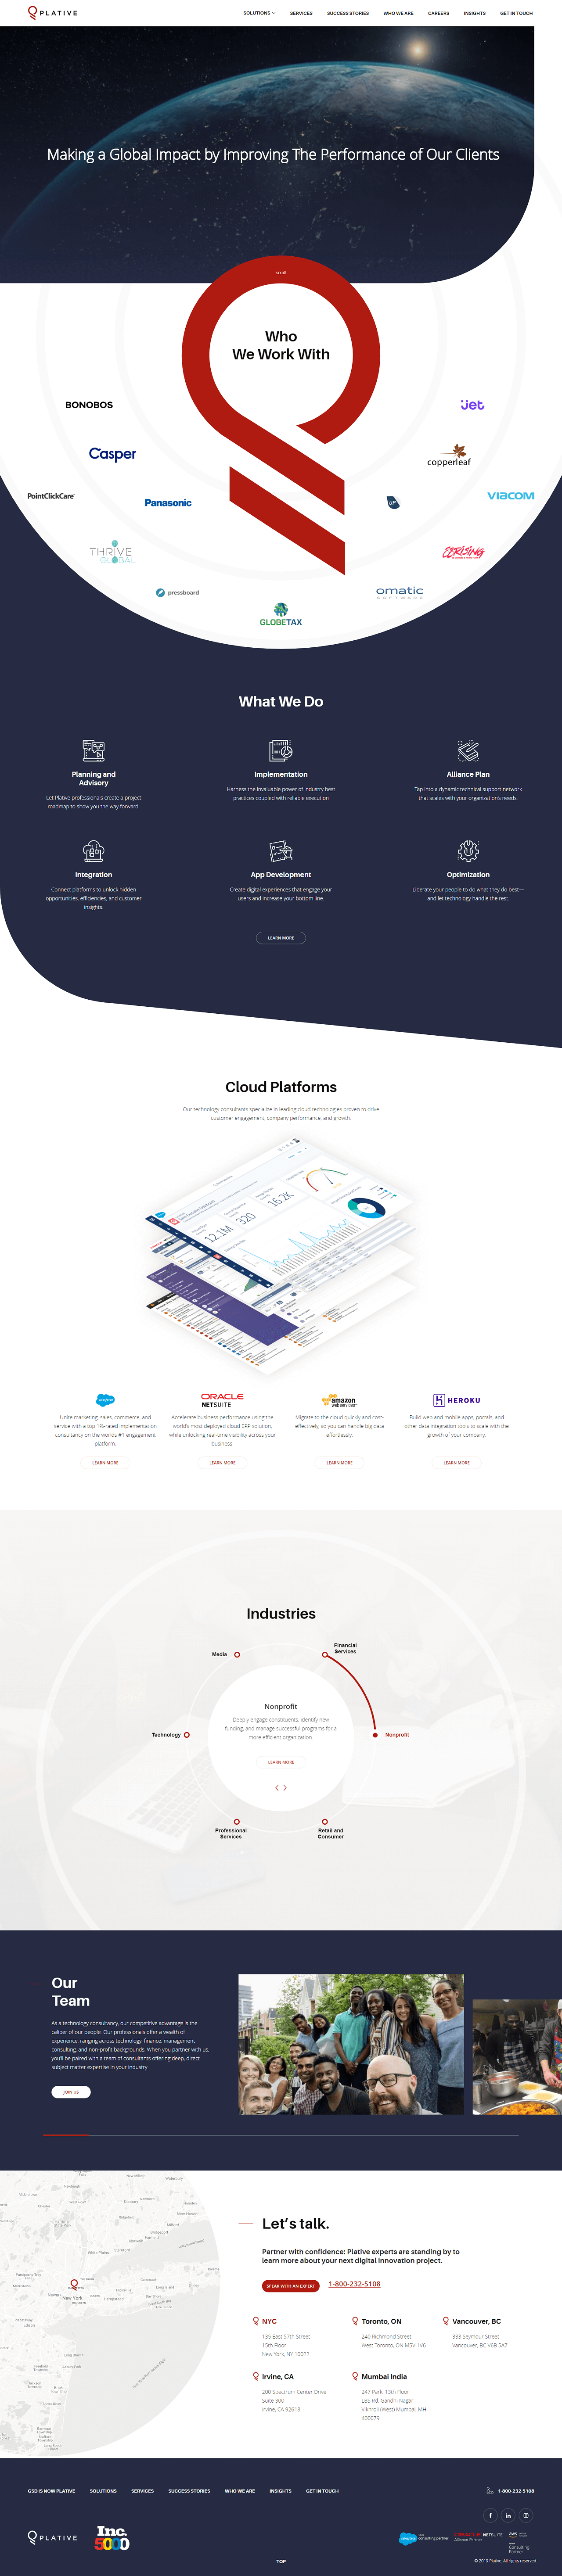 Plative's Home Page Design & Development